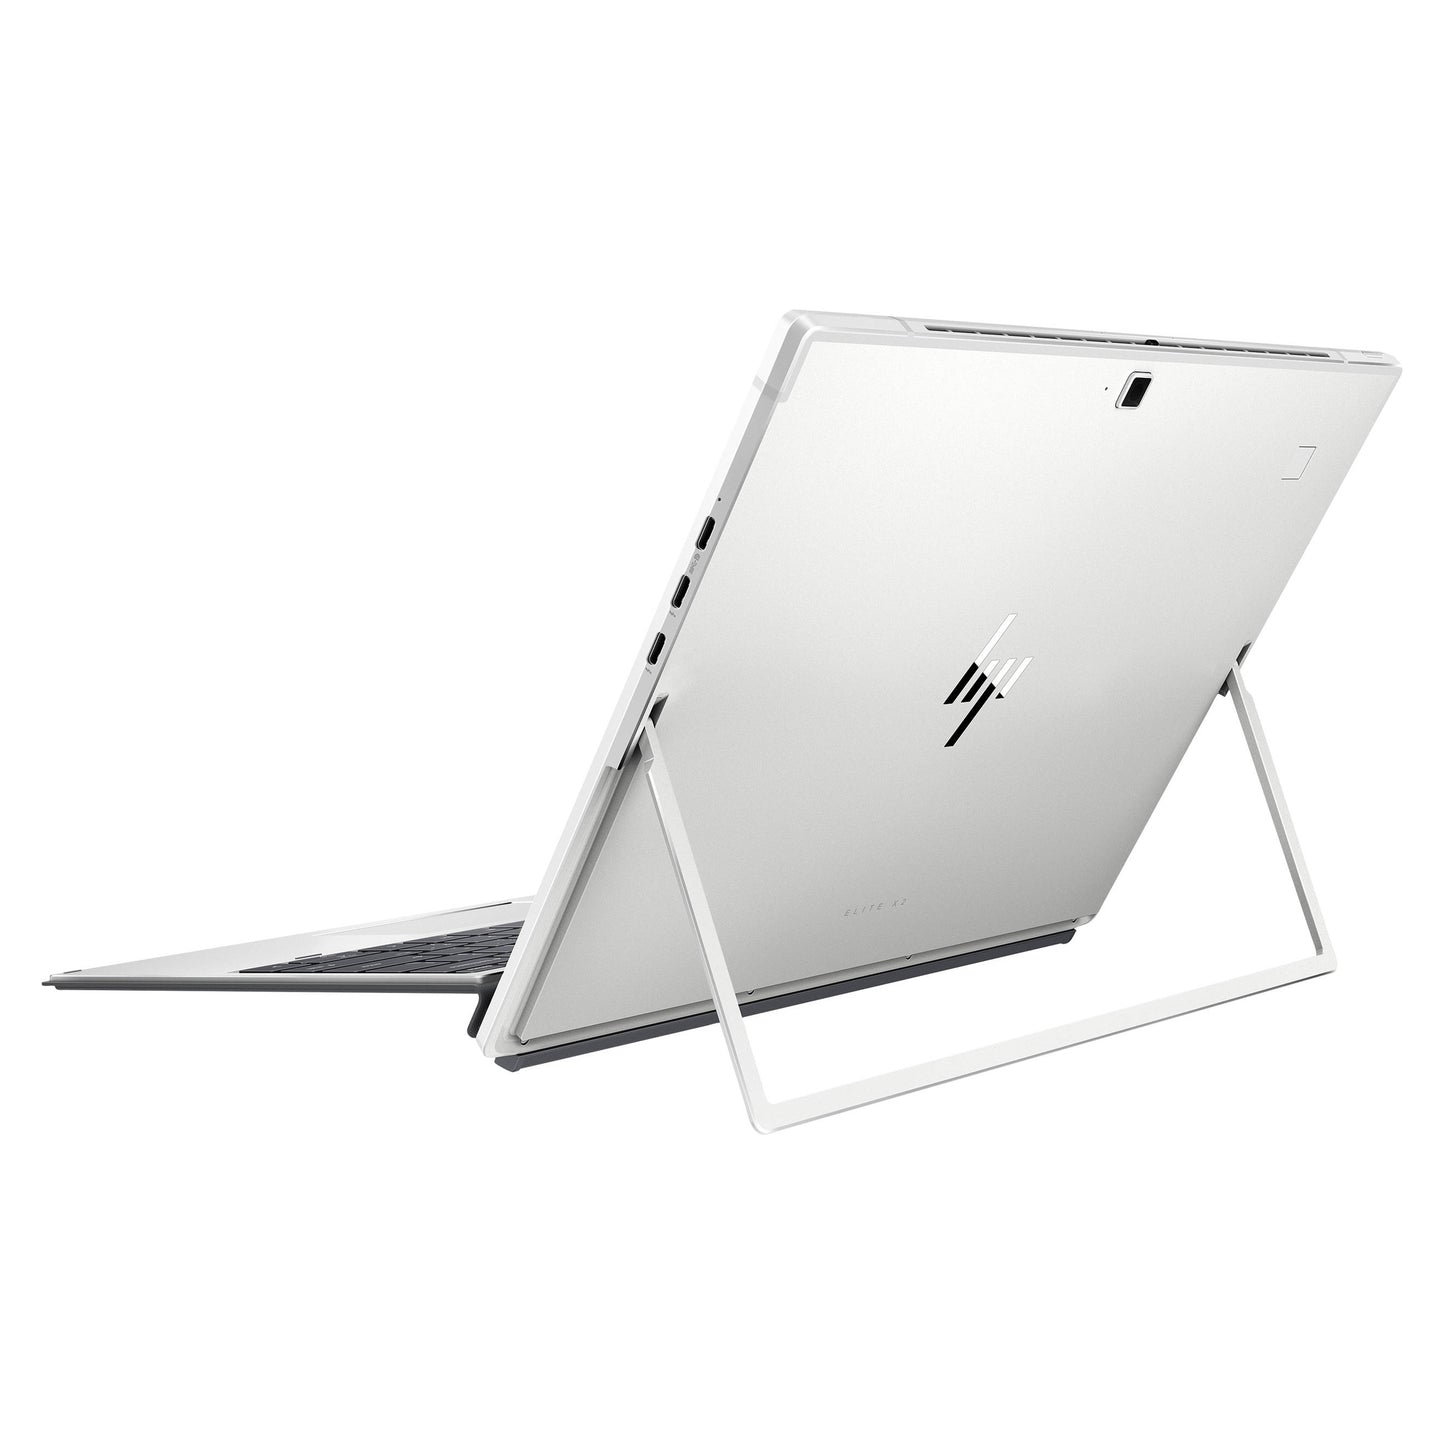 HP Elite X2 2in1 Core i5-8365u Touchscreen With Pen Detachable Laptop (Open Box)